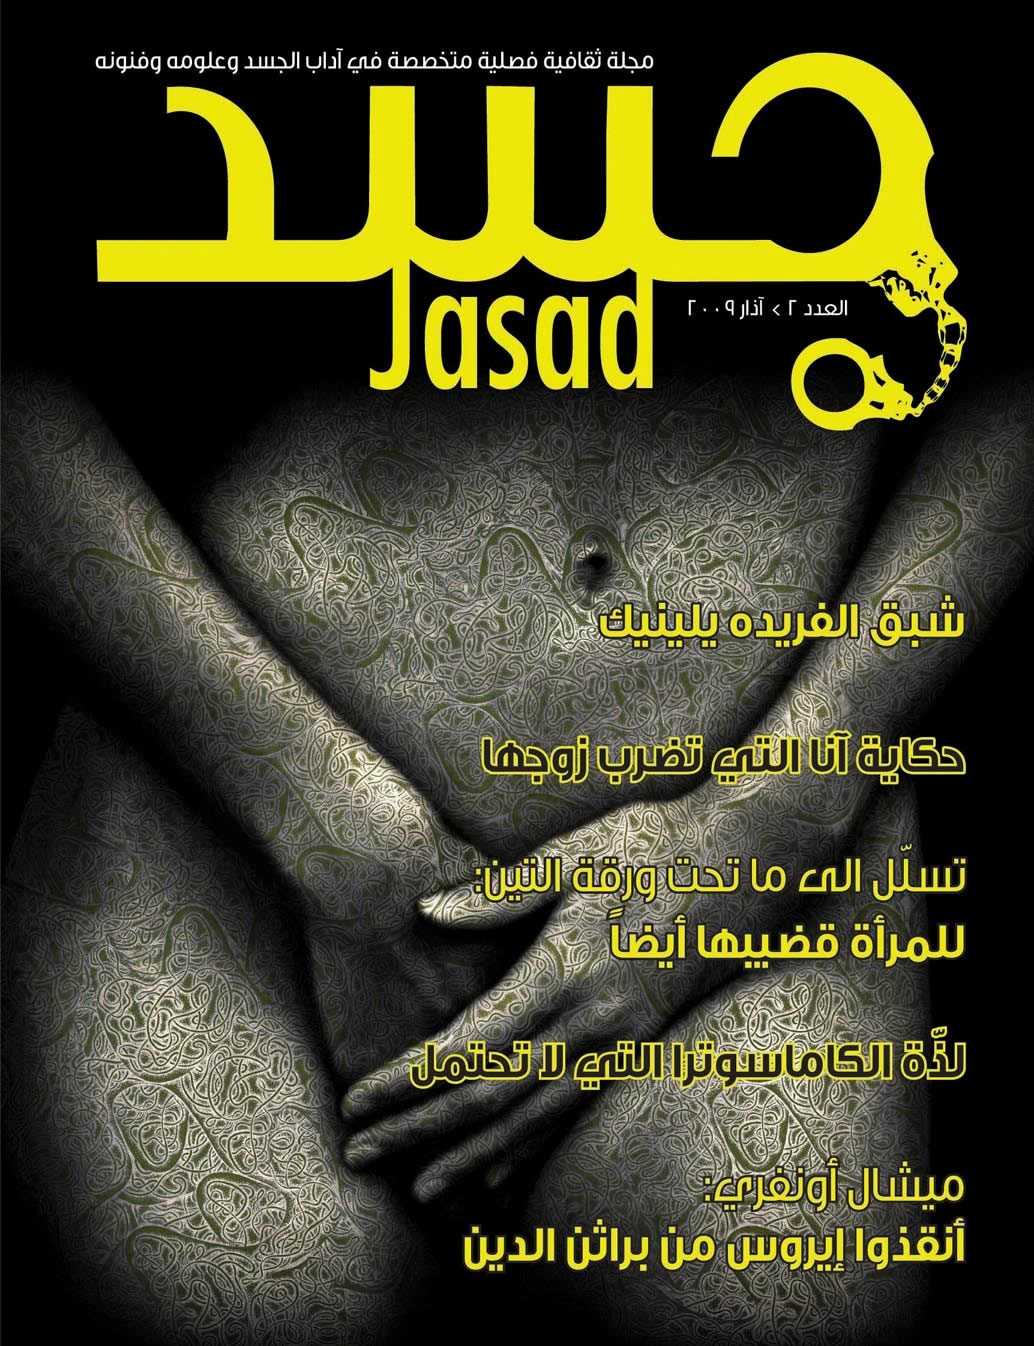 Jasad, magazine _érotique_ libanais